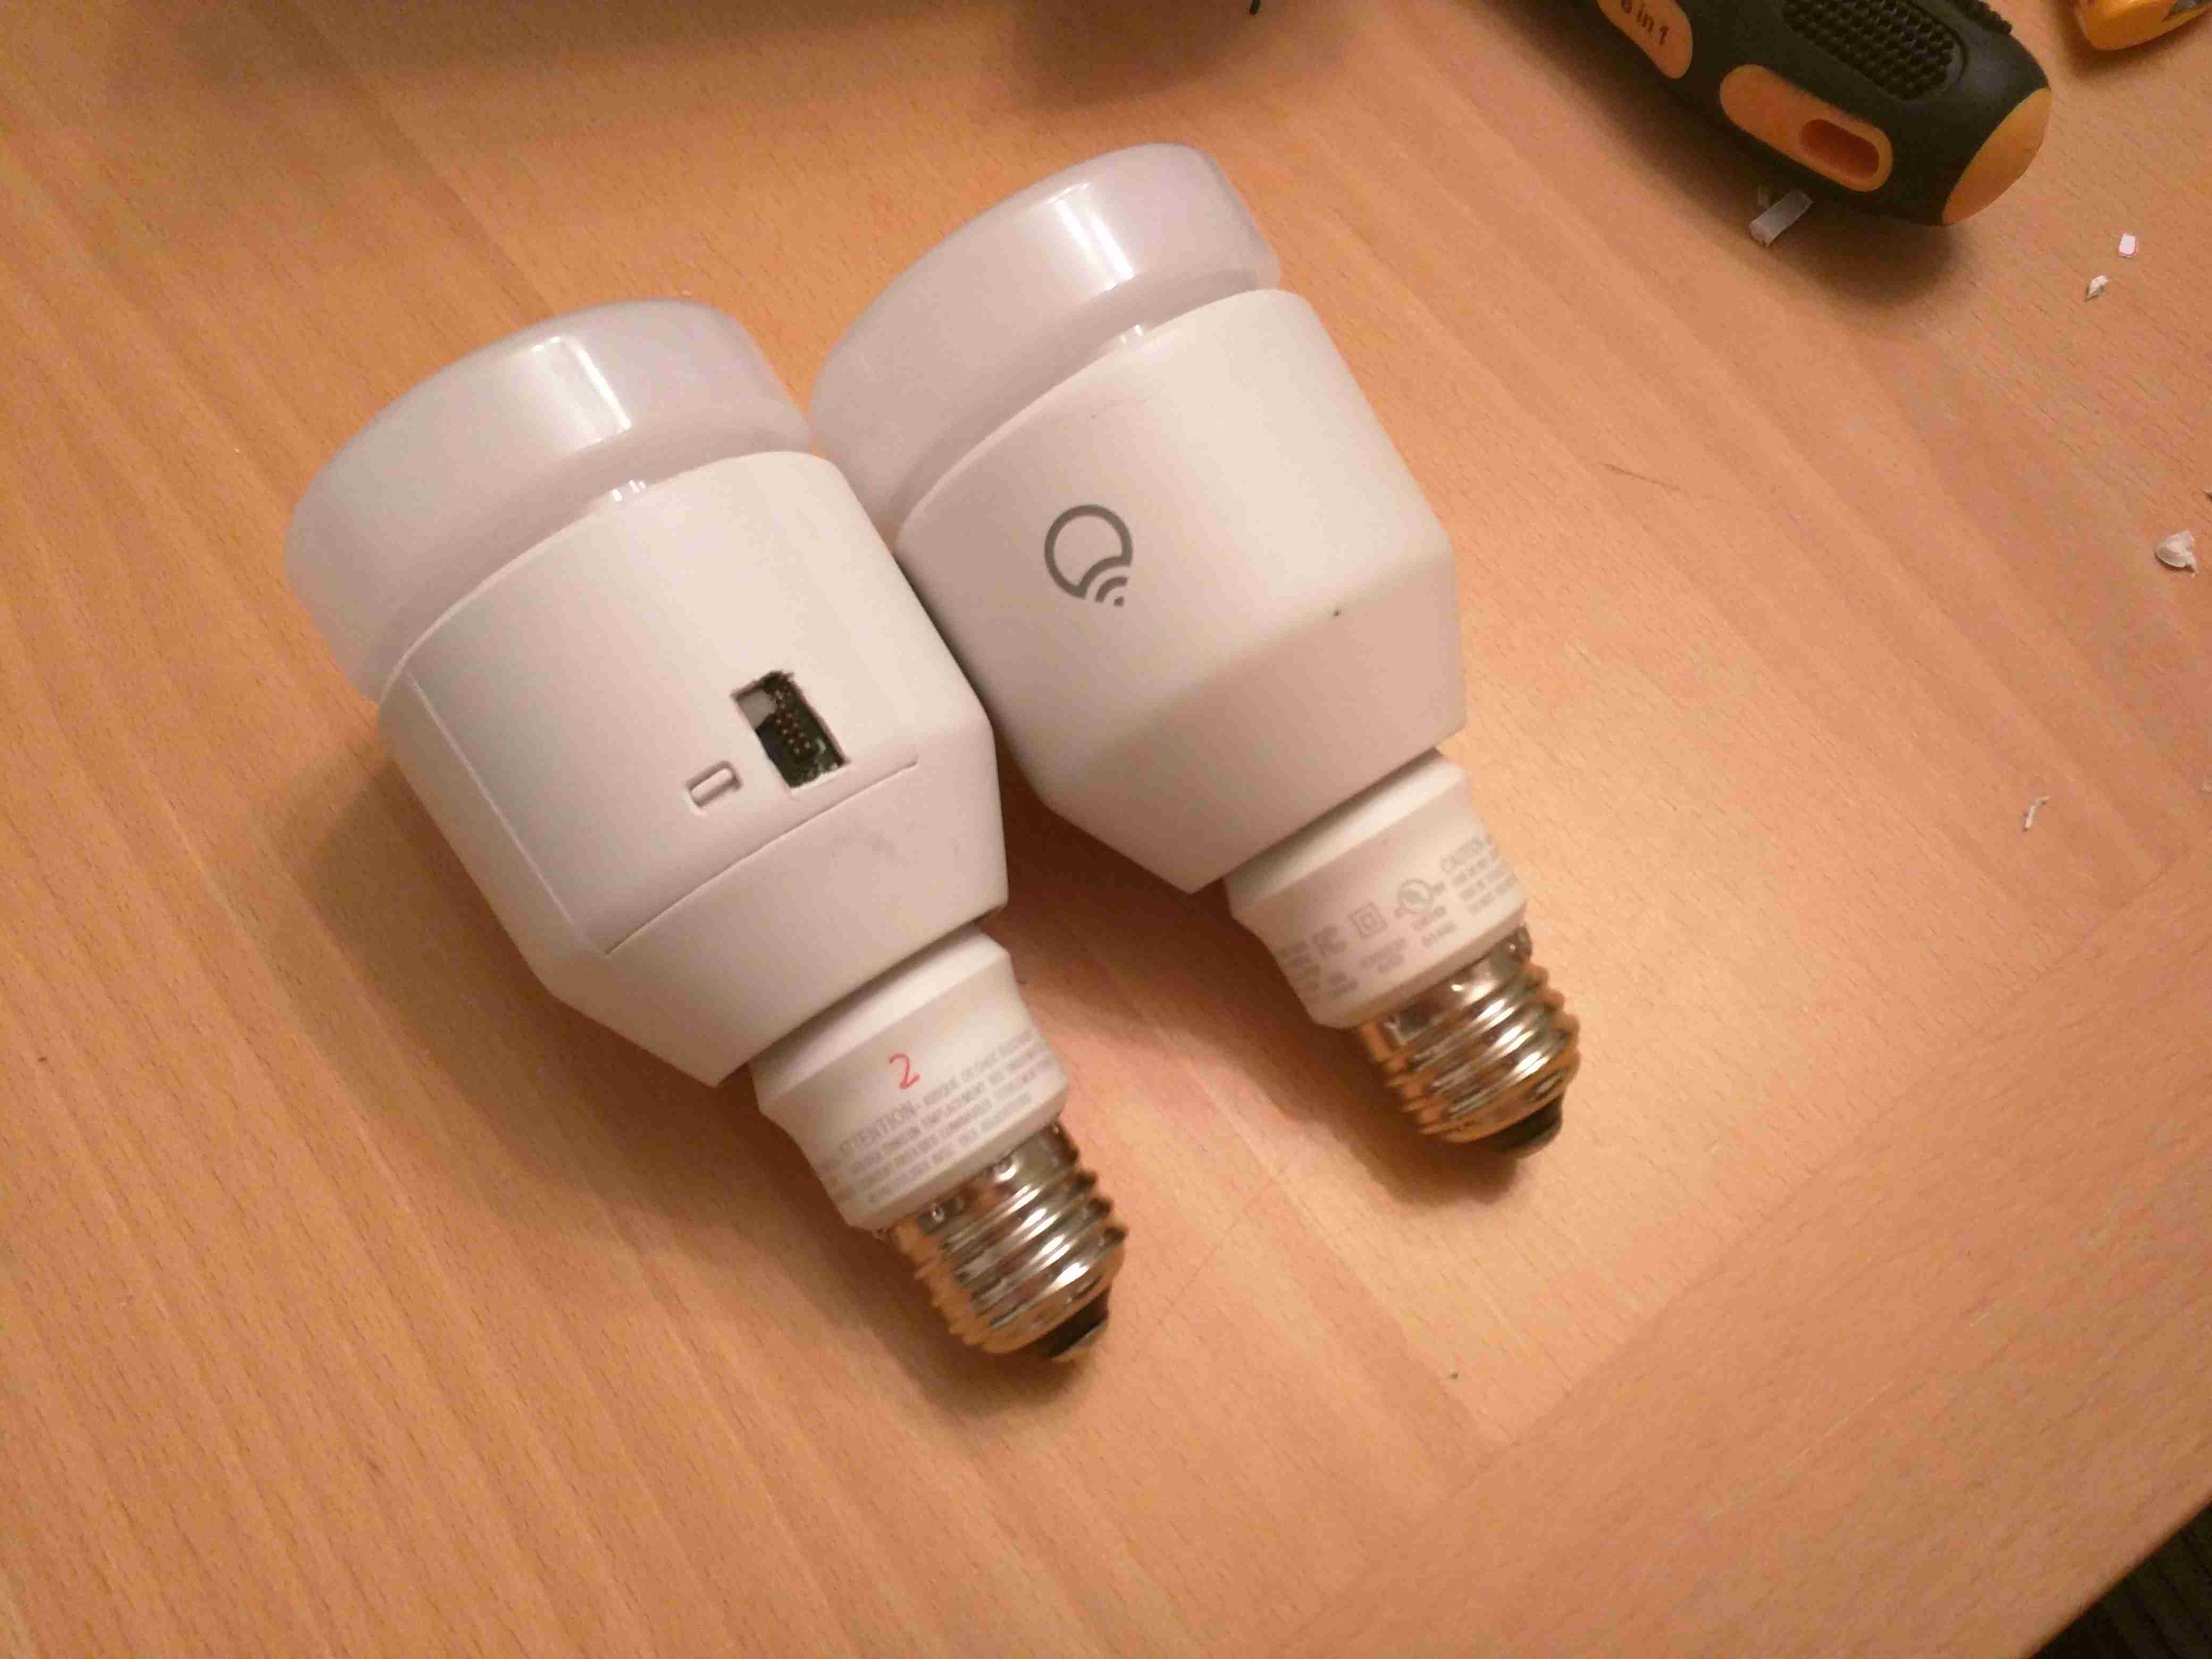 Modified smart bulb